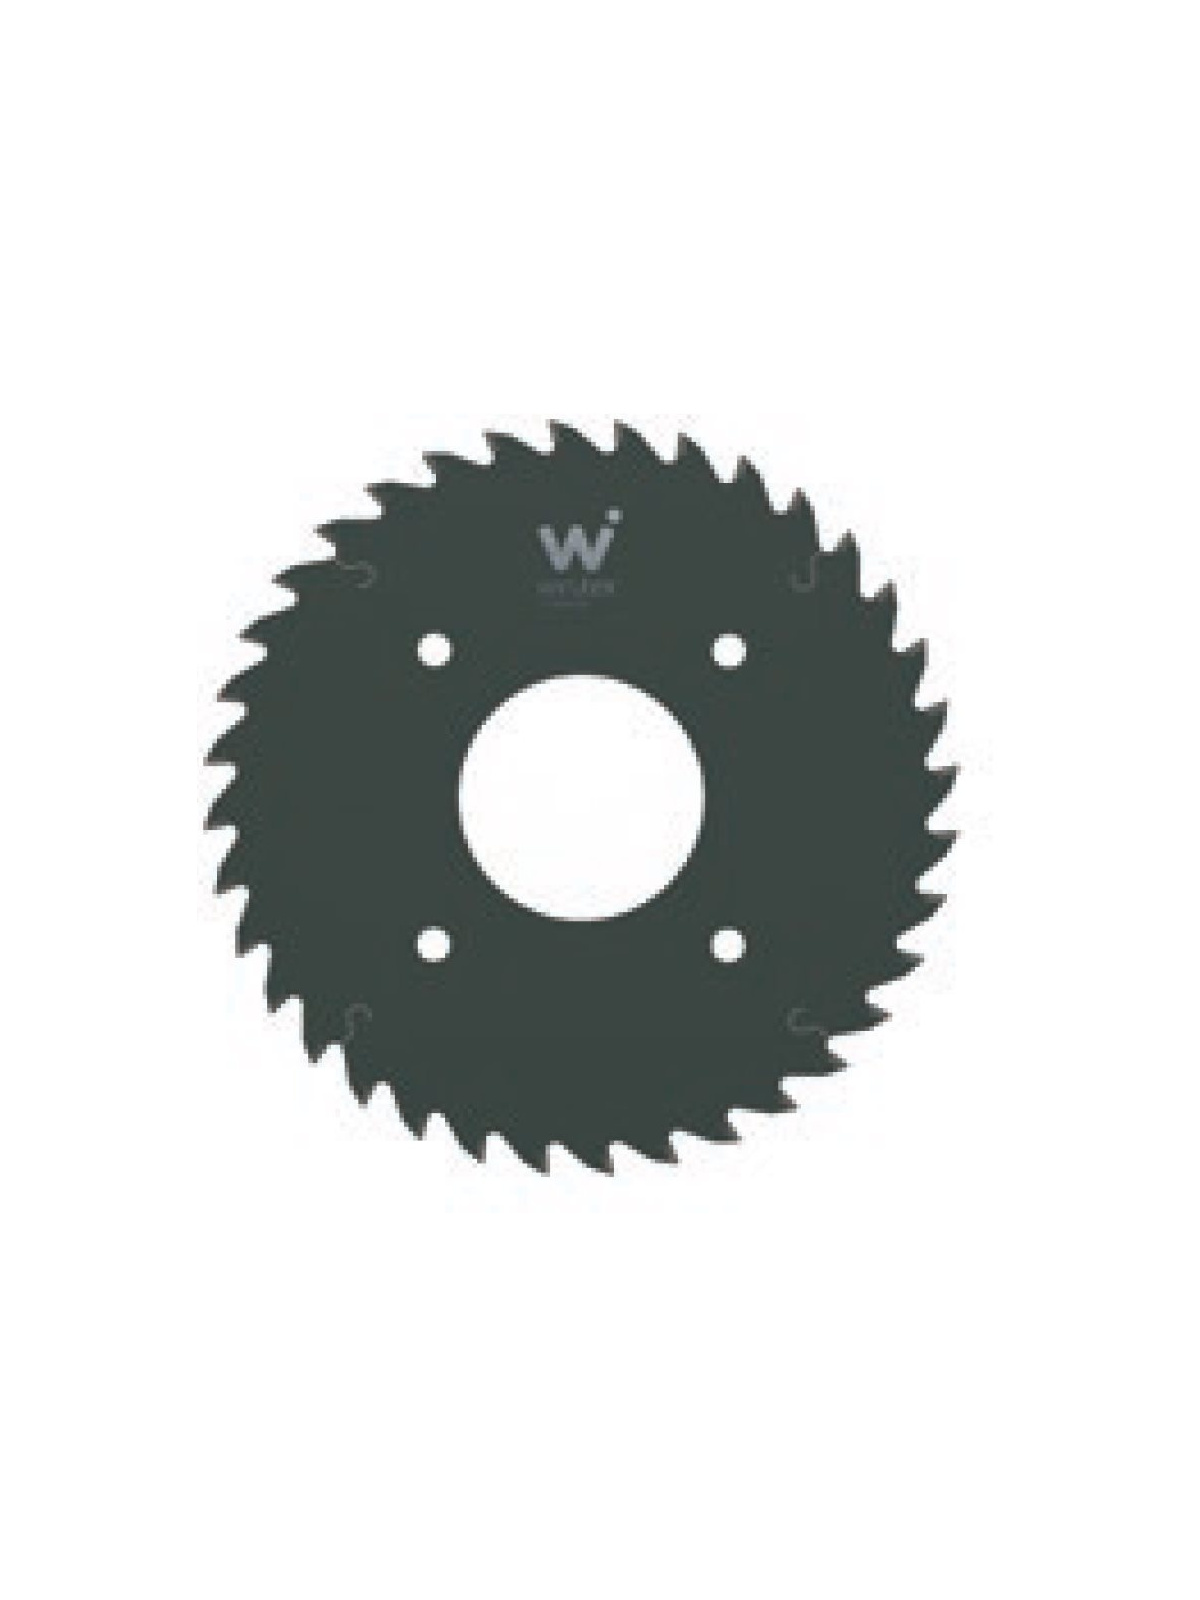 Wirutex Scoring saw blade PCD for Biesse Selco D200mm d65mm | JVL-Europe